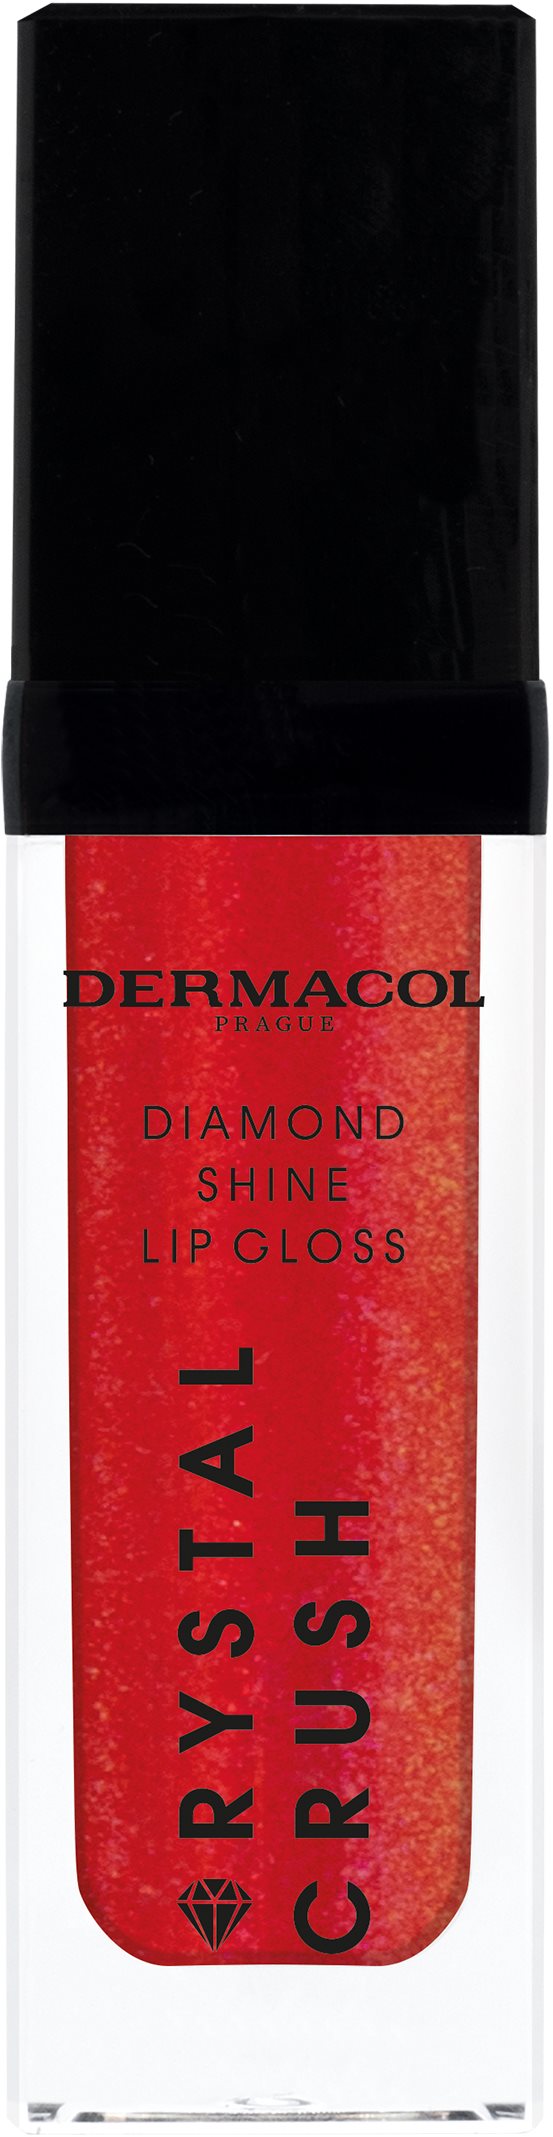 DERMACOL Crystal Crush Diamond Shine Lip Gloss No.07